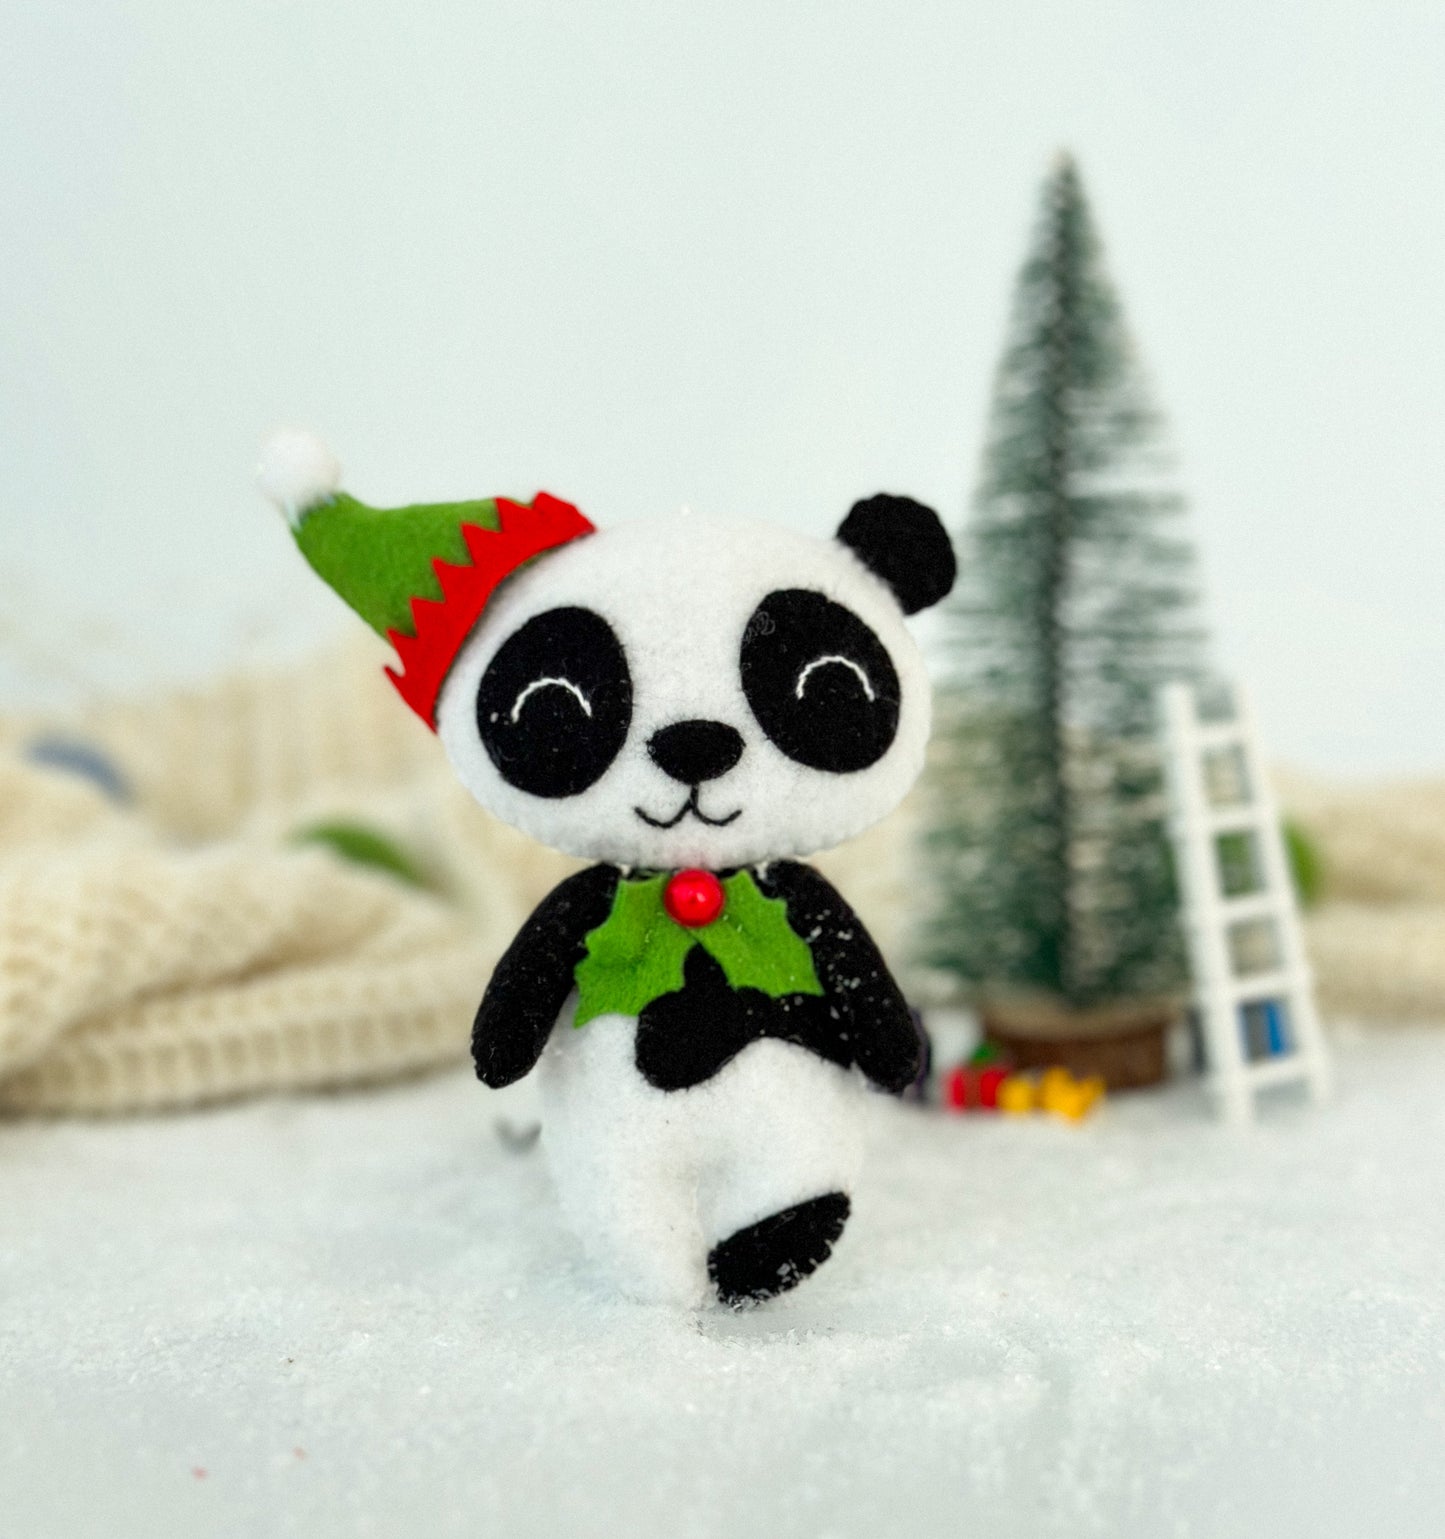 Christmas panda ornament